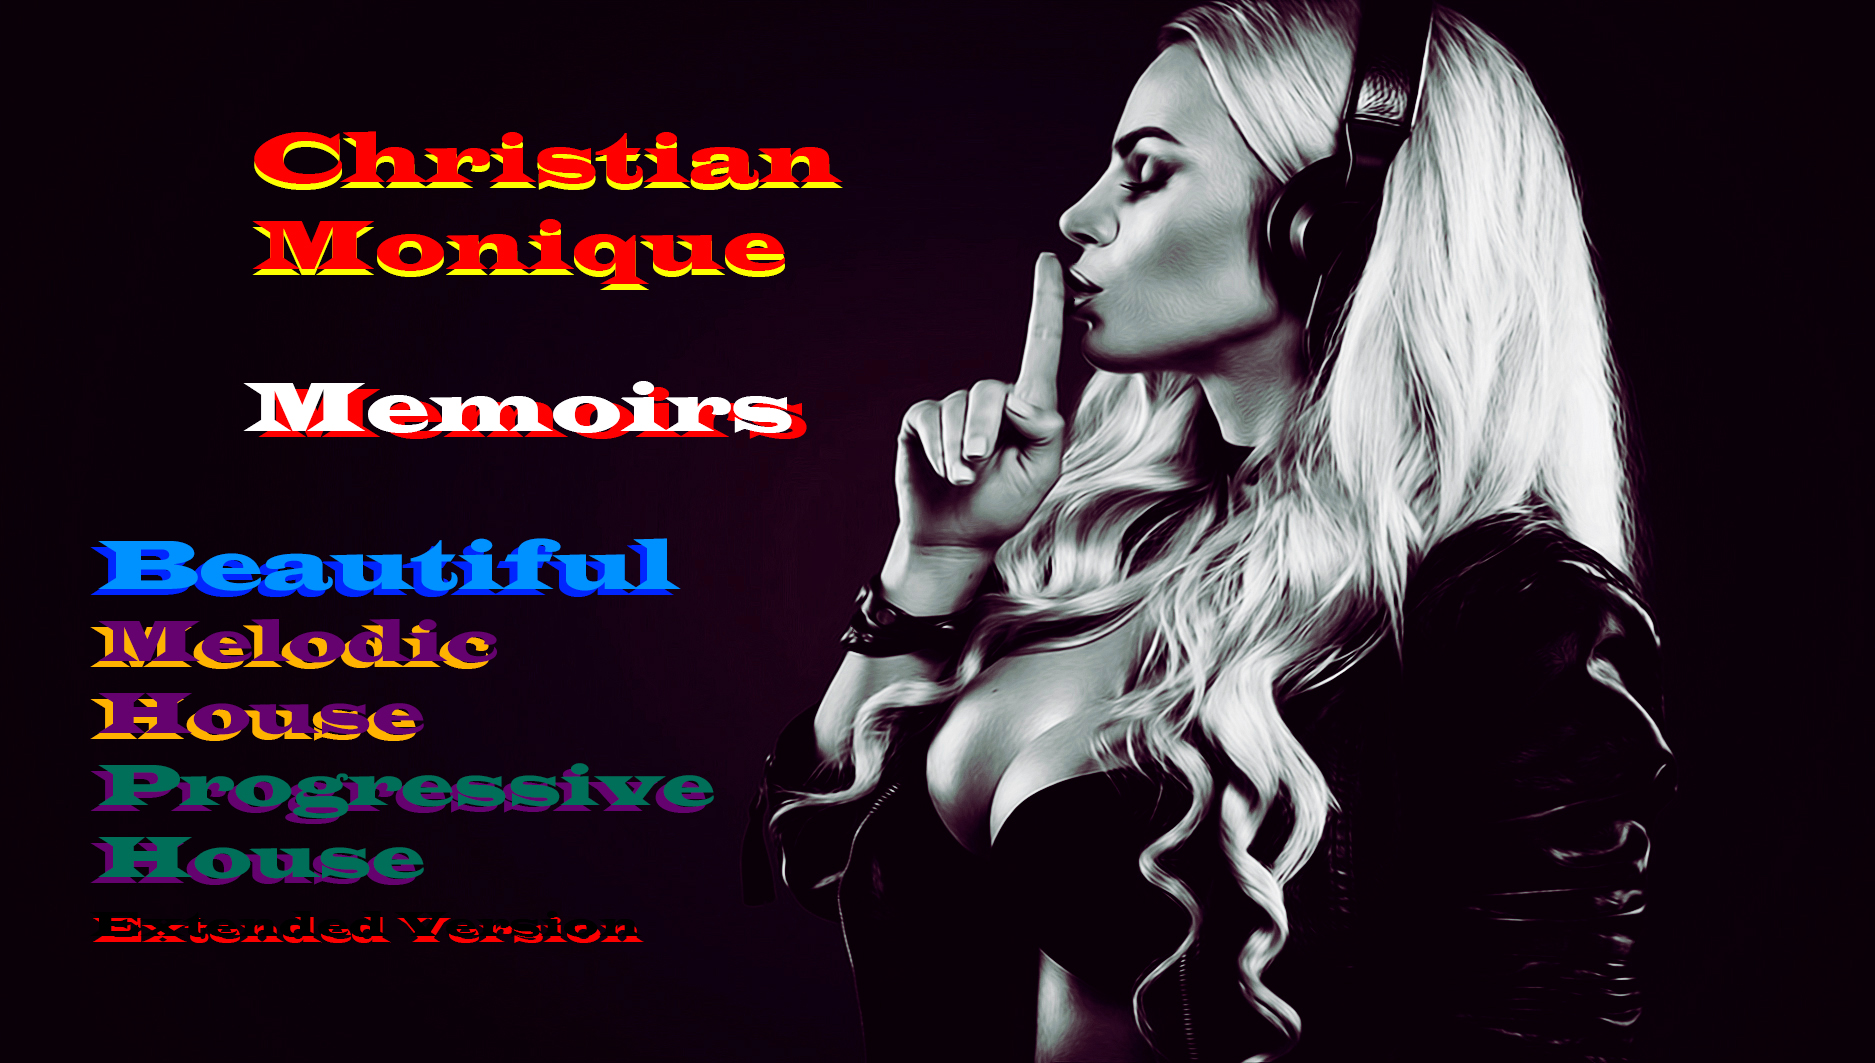 Memoirs Christian Monique Remix,Radio Edit,Melodic House,Мелодик Прогрессив Хаус, #22 .mp4